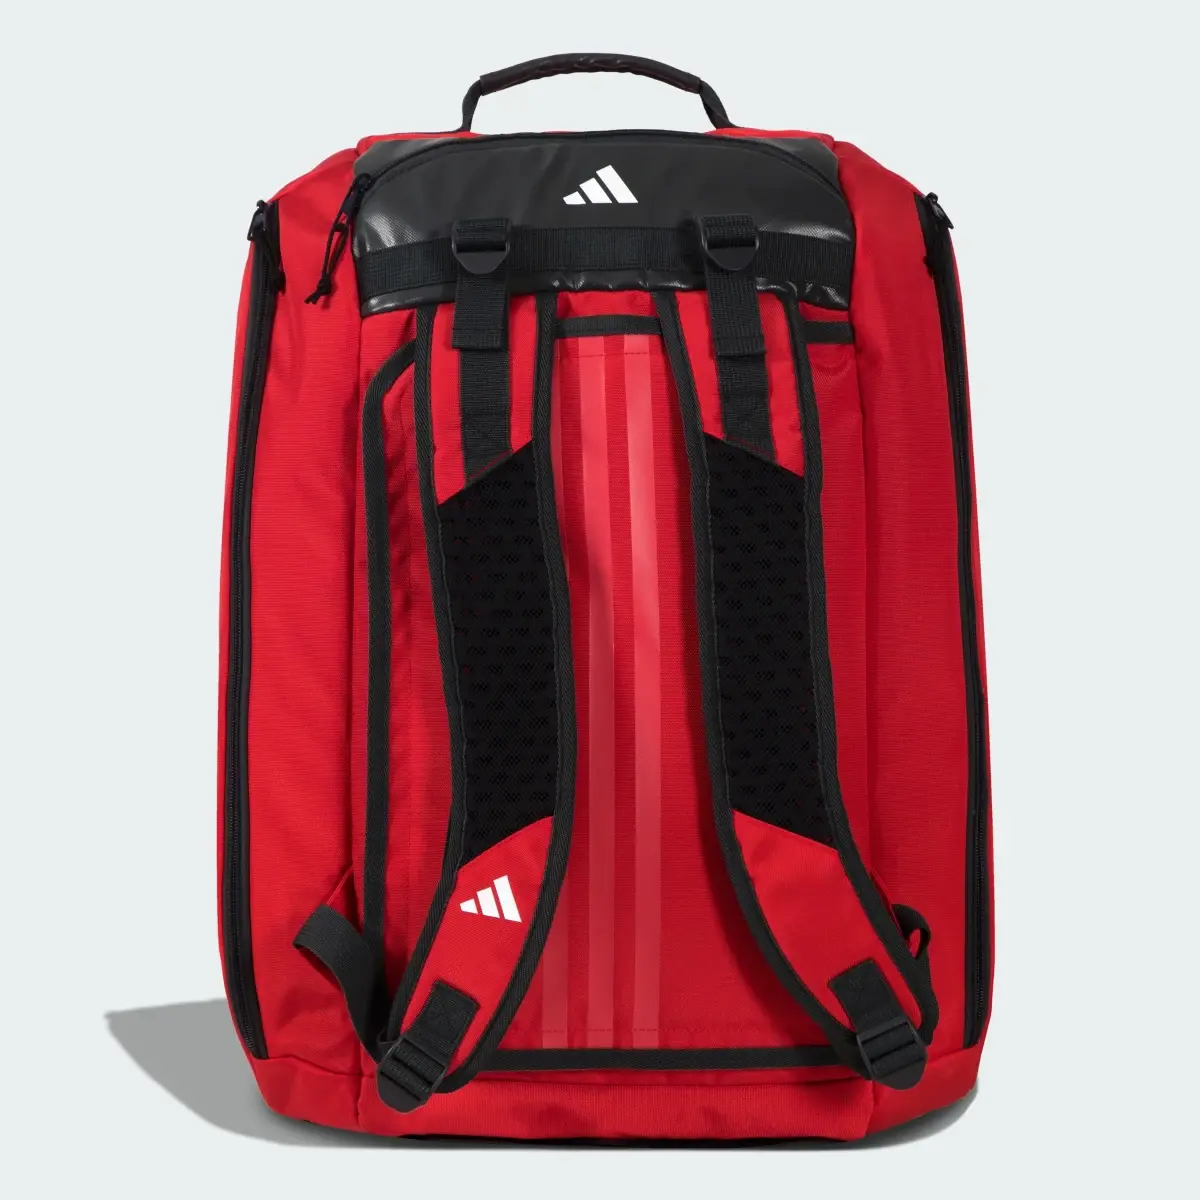 Adidas Racket Bag Tour 3.3 Solar Red. 3